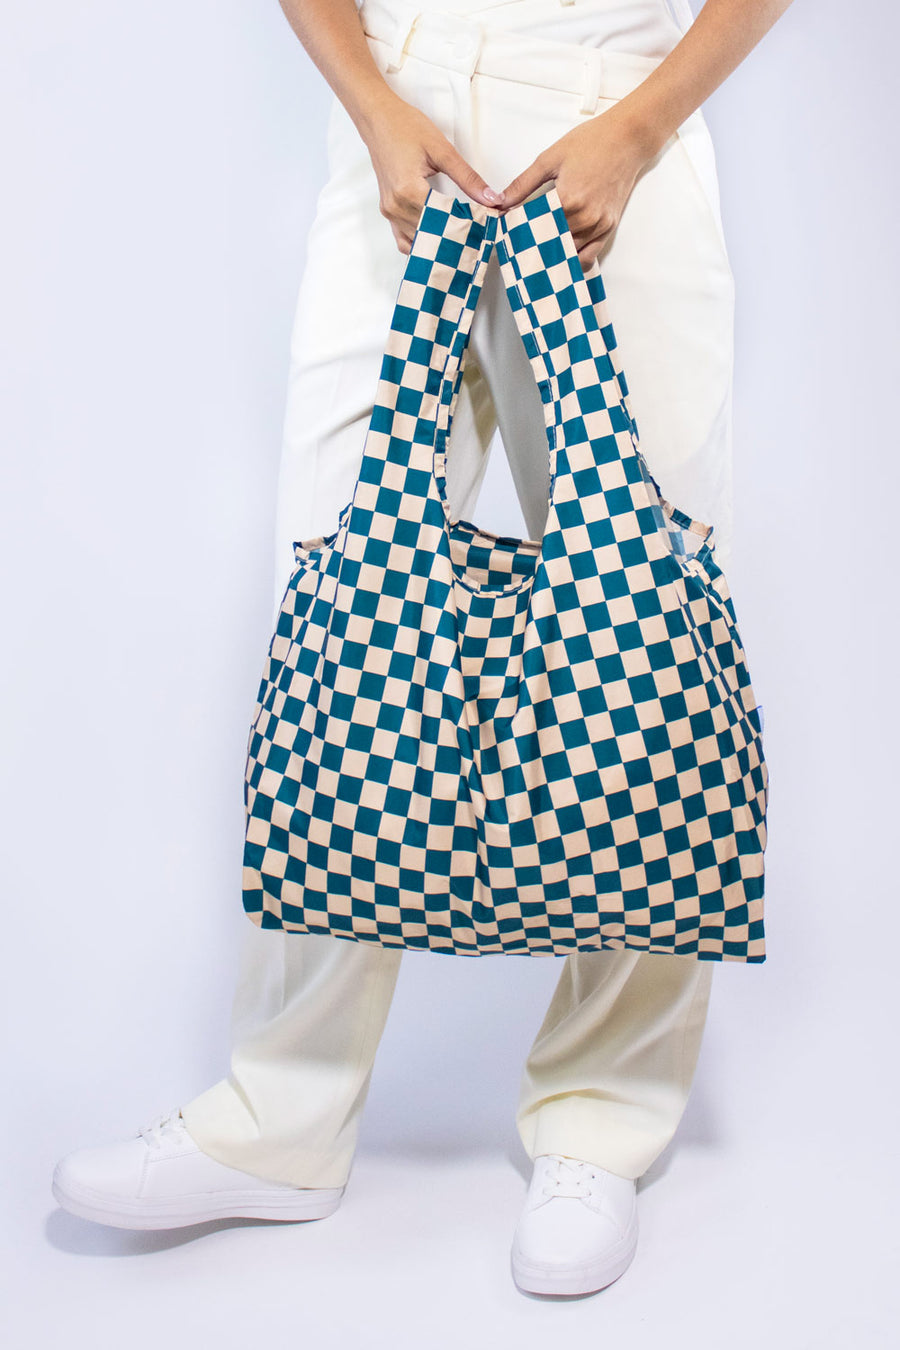 Kind Bag Checkerboard Teal Beige Medium Reusable Bag Front View